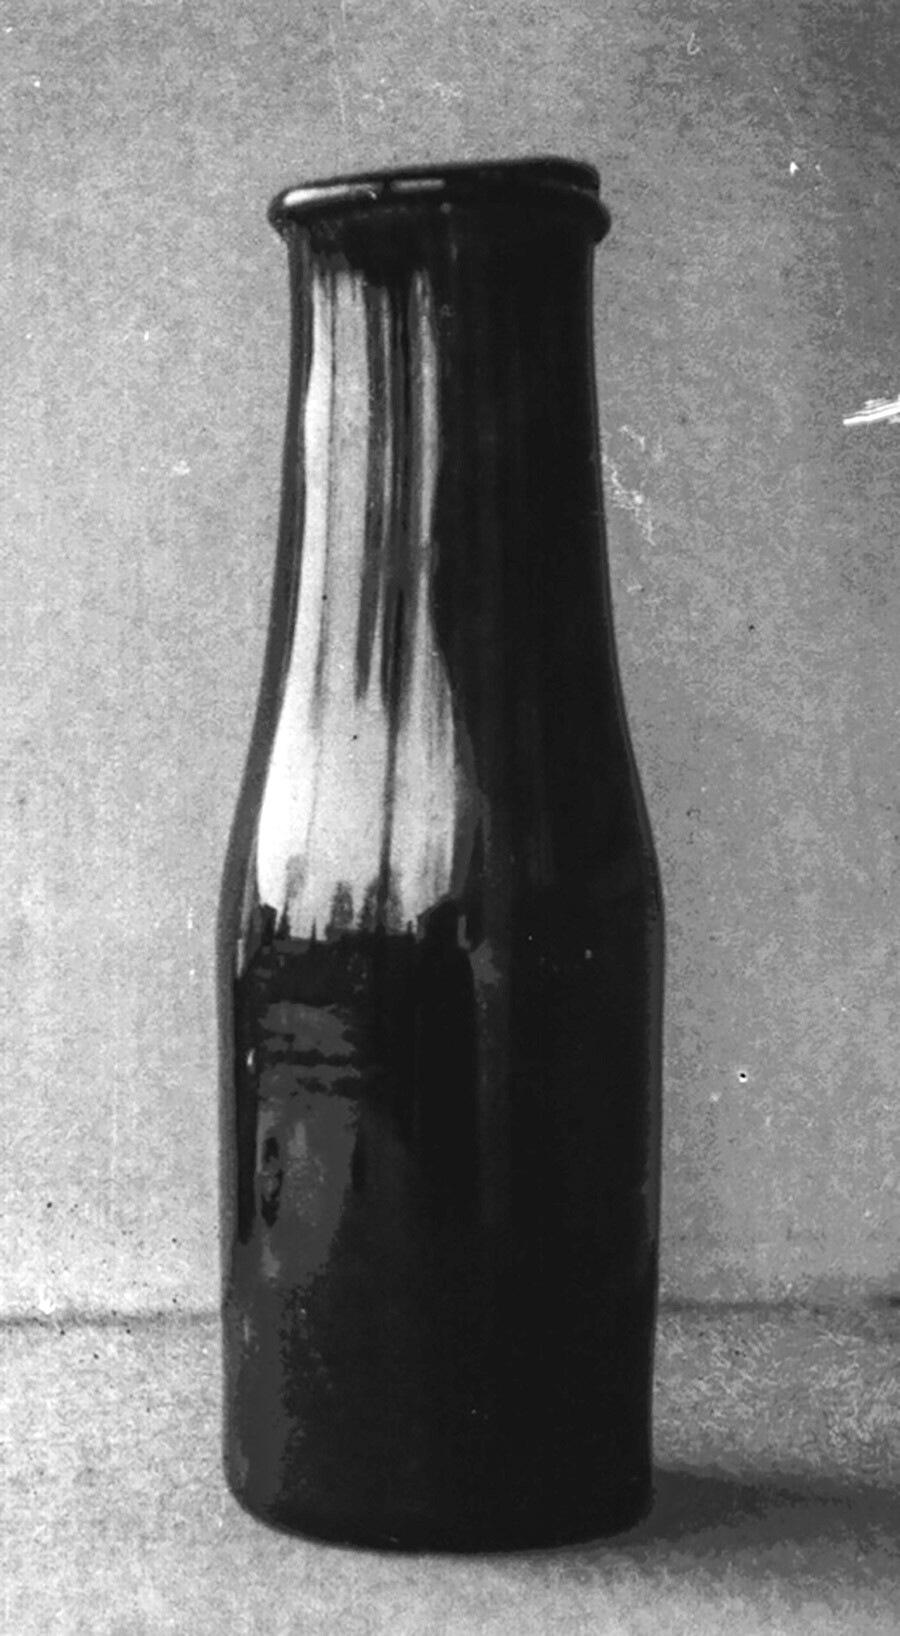 Nicolas Appert invented preserved food in glass bottles. 